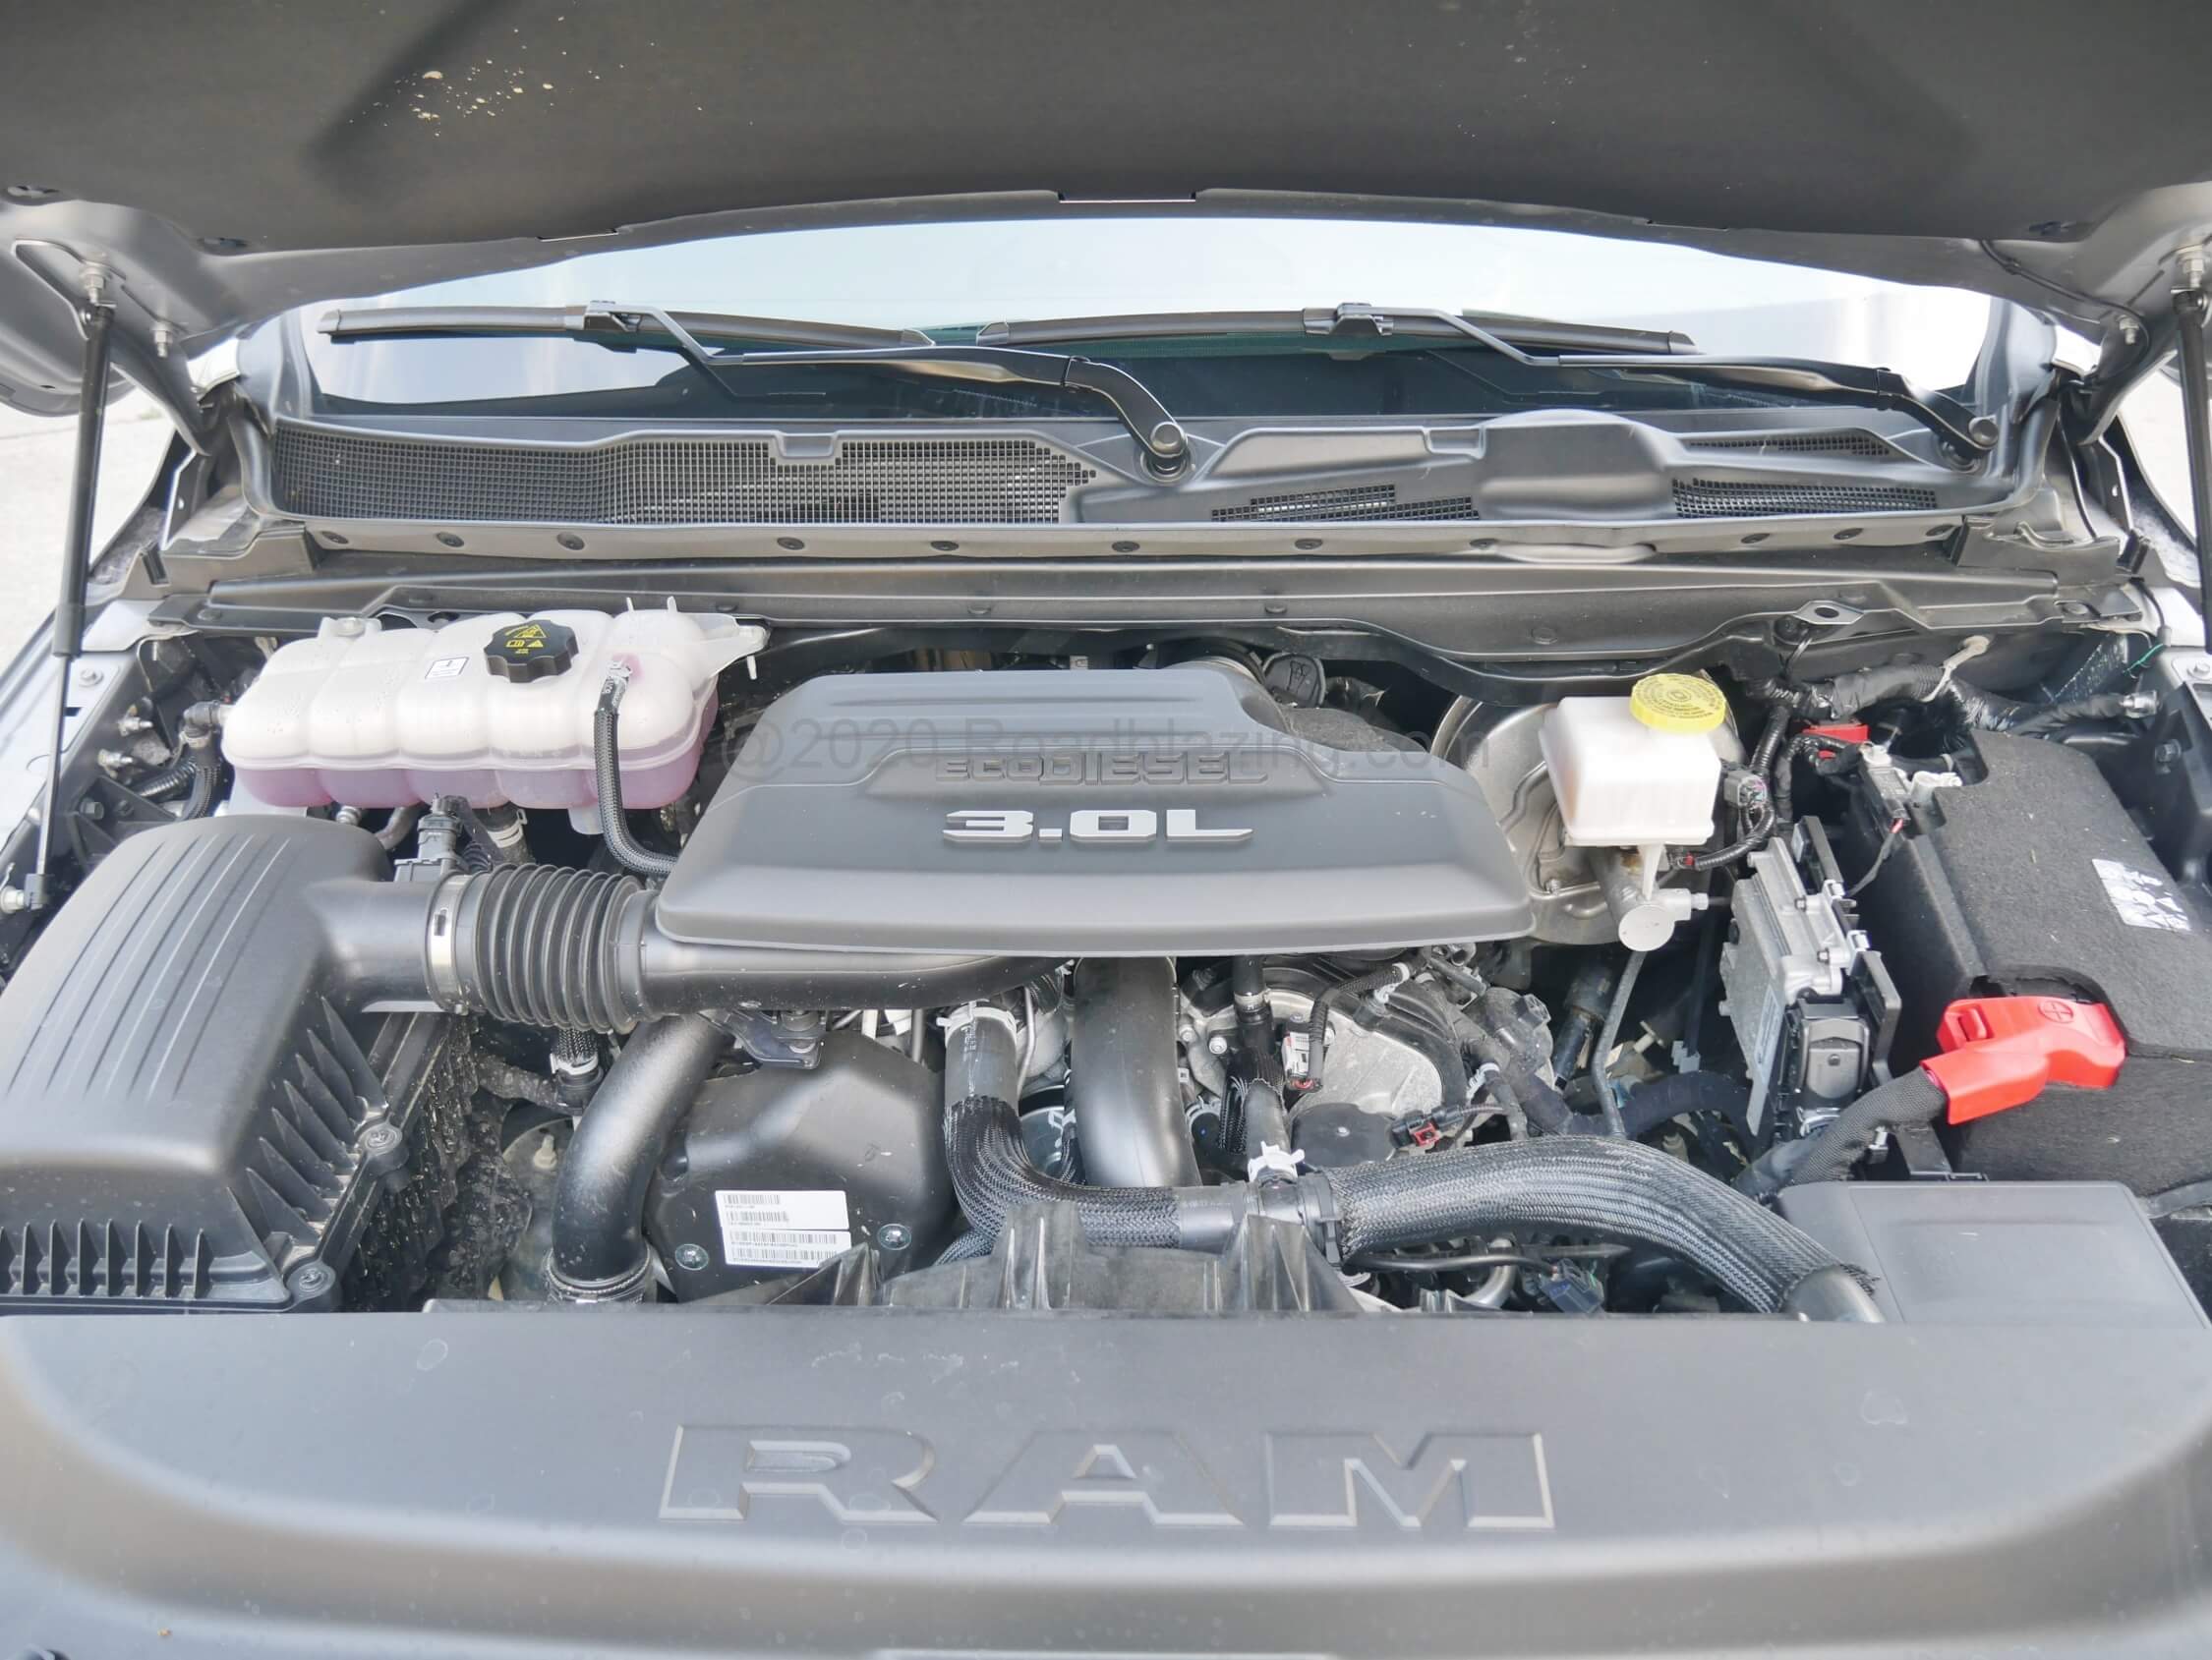 2020 RAM 1500 Rebel Crew 4x4 TDi: 260 hp / 480 lb-ft = +13% / +9% over the previous iteration VM Motori 3.0L Ecodiesel